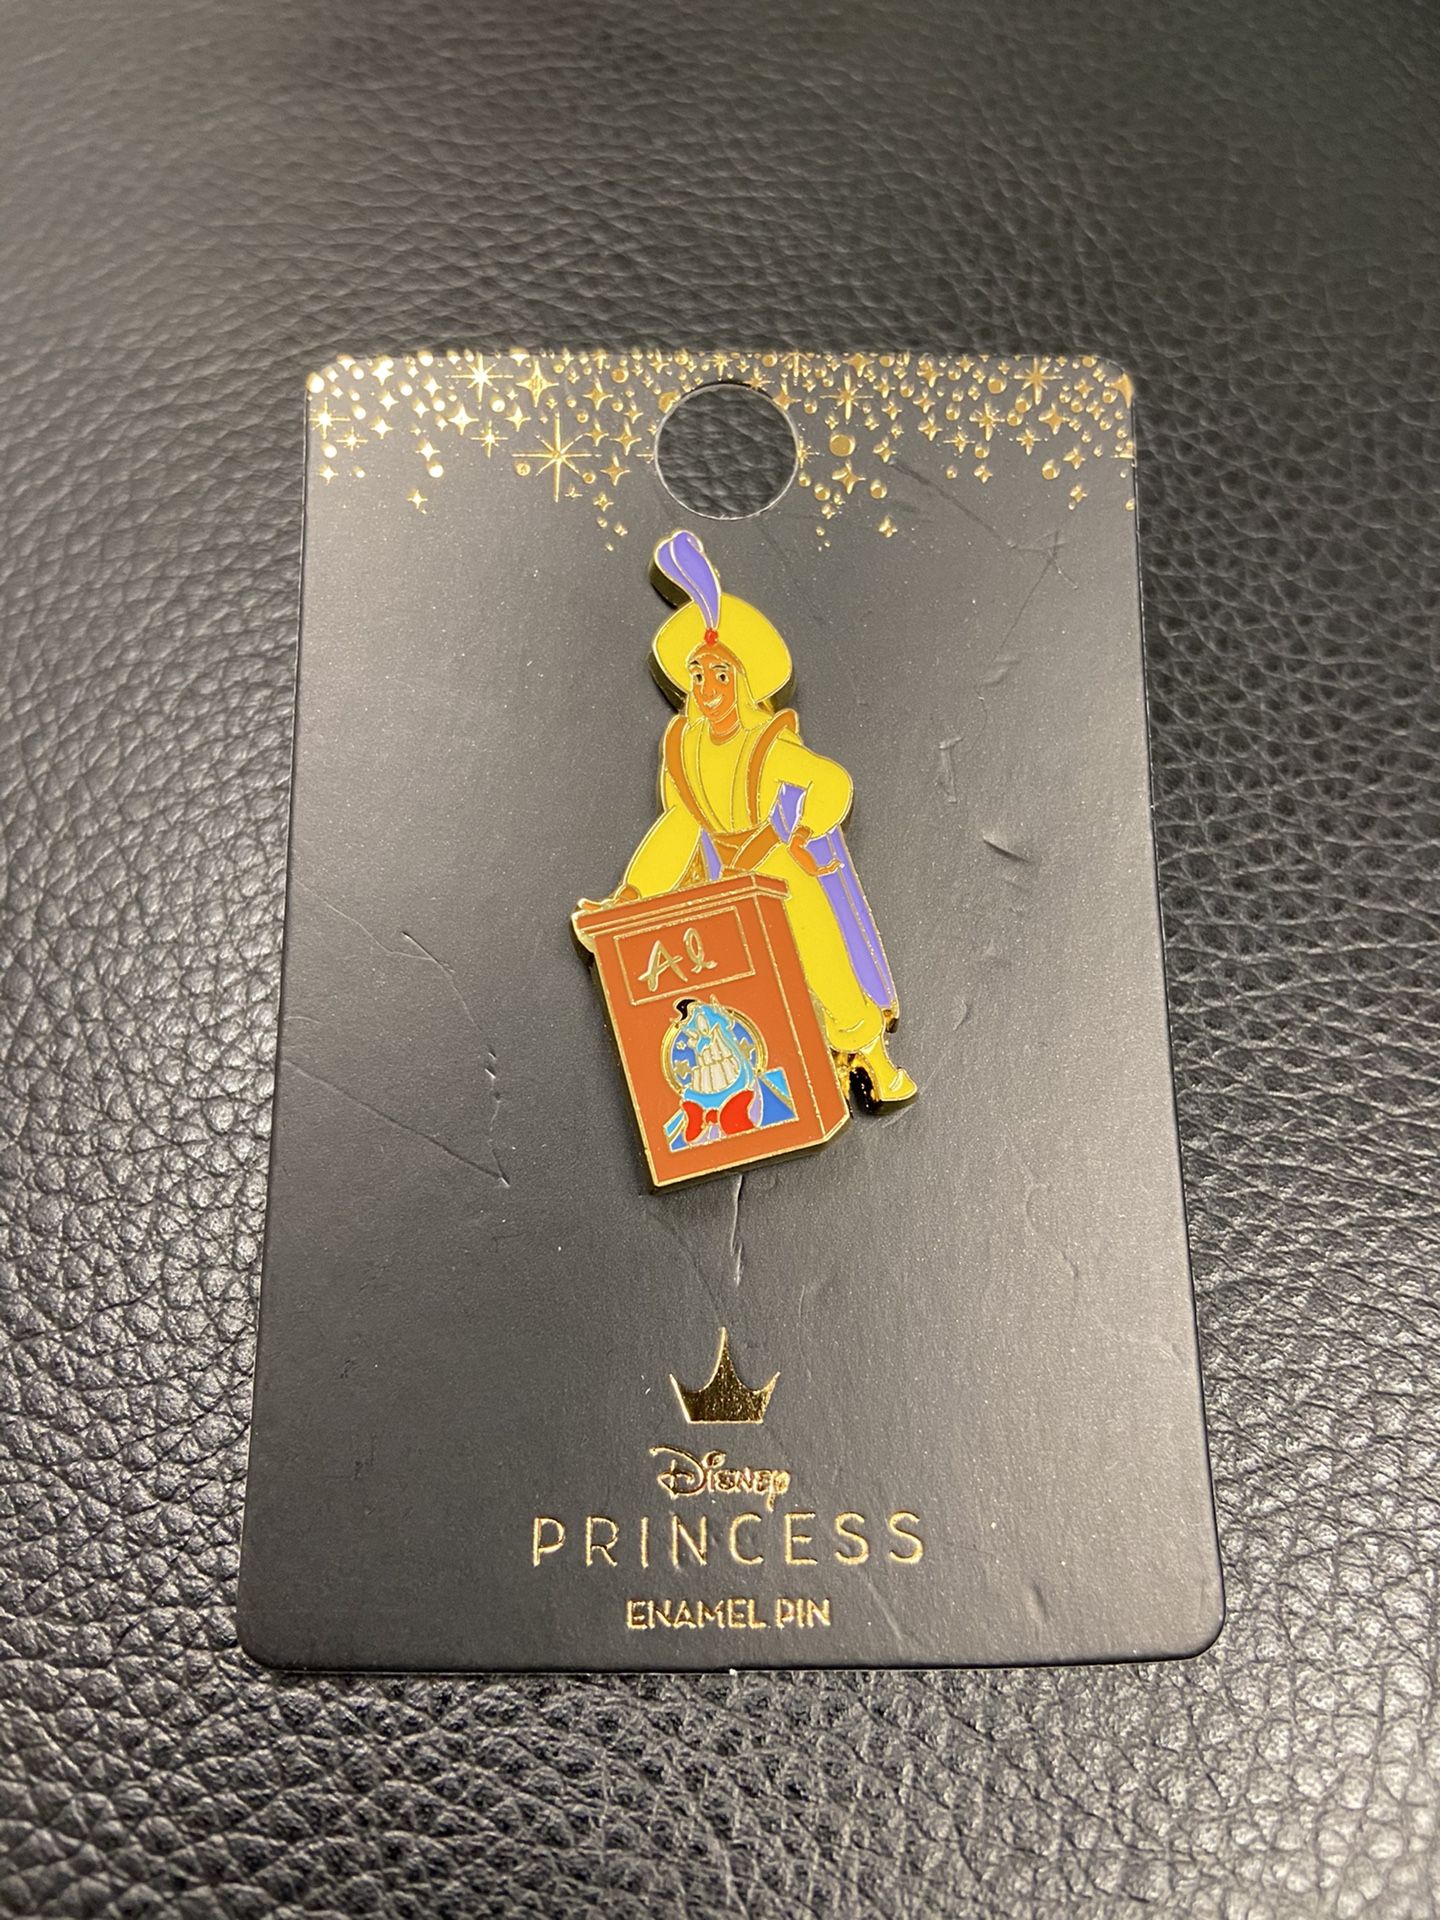 Aladdin Prince Ali enamel Pin - Disney Pin - Loungefly - Limited Princess edition Pin